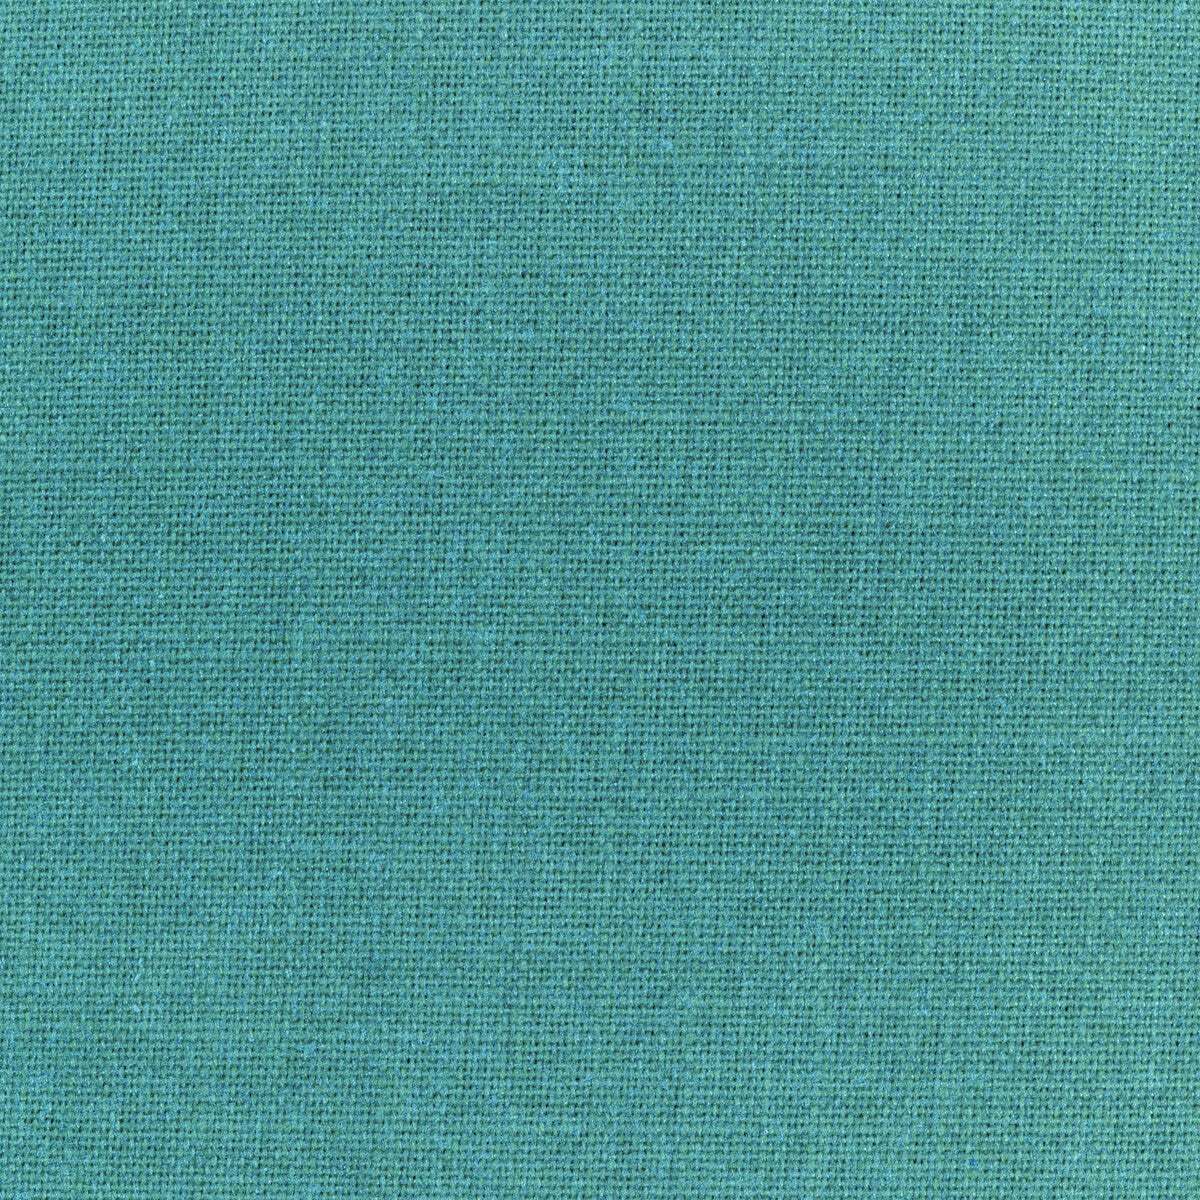 Kravet Smart fabric in 36112-13 color - pattern 36112.13.0 - by Kravet Smart in the Performance Kravetarmor collection